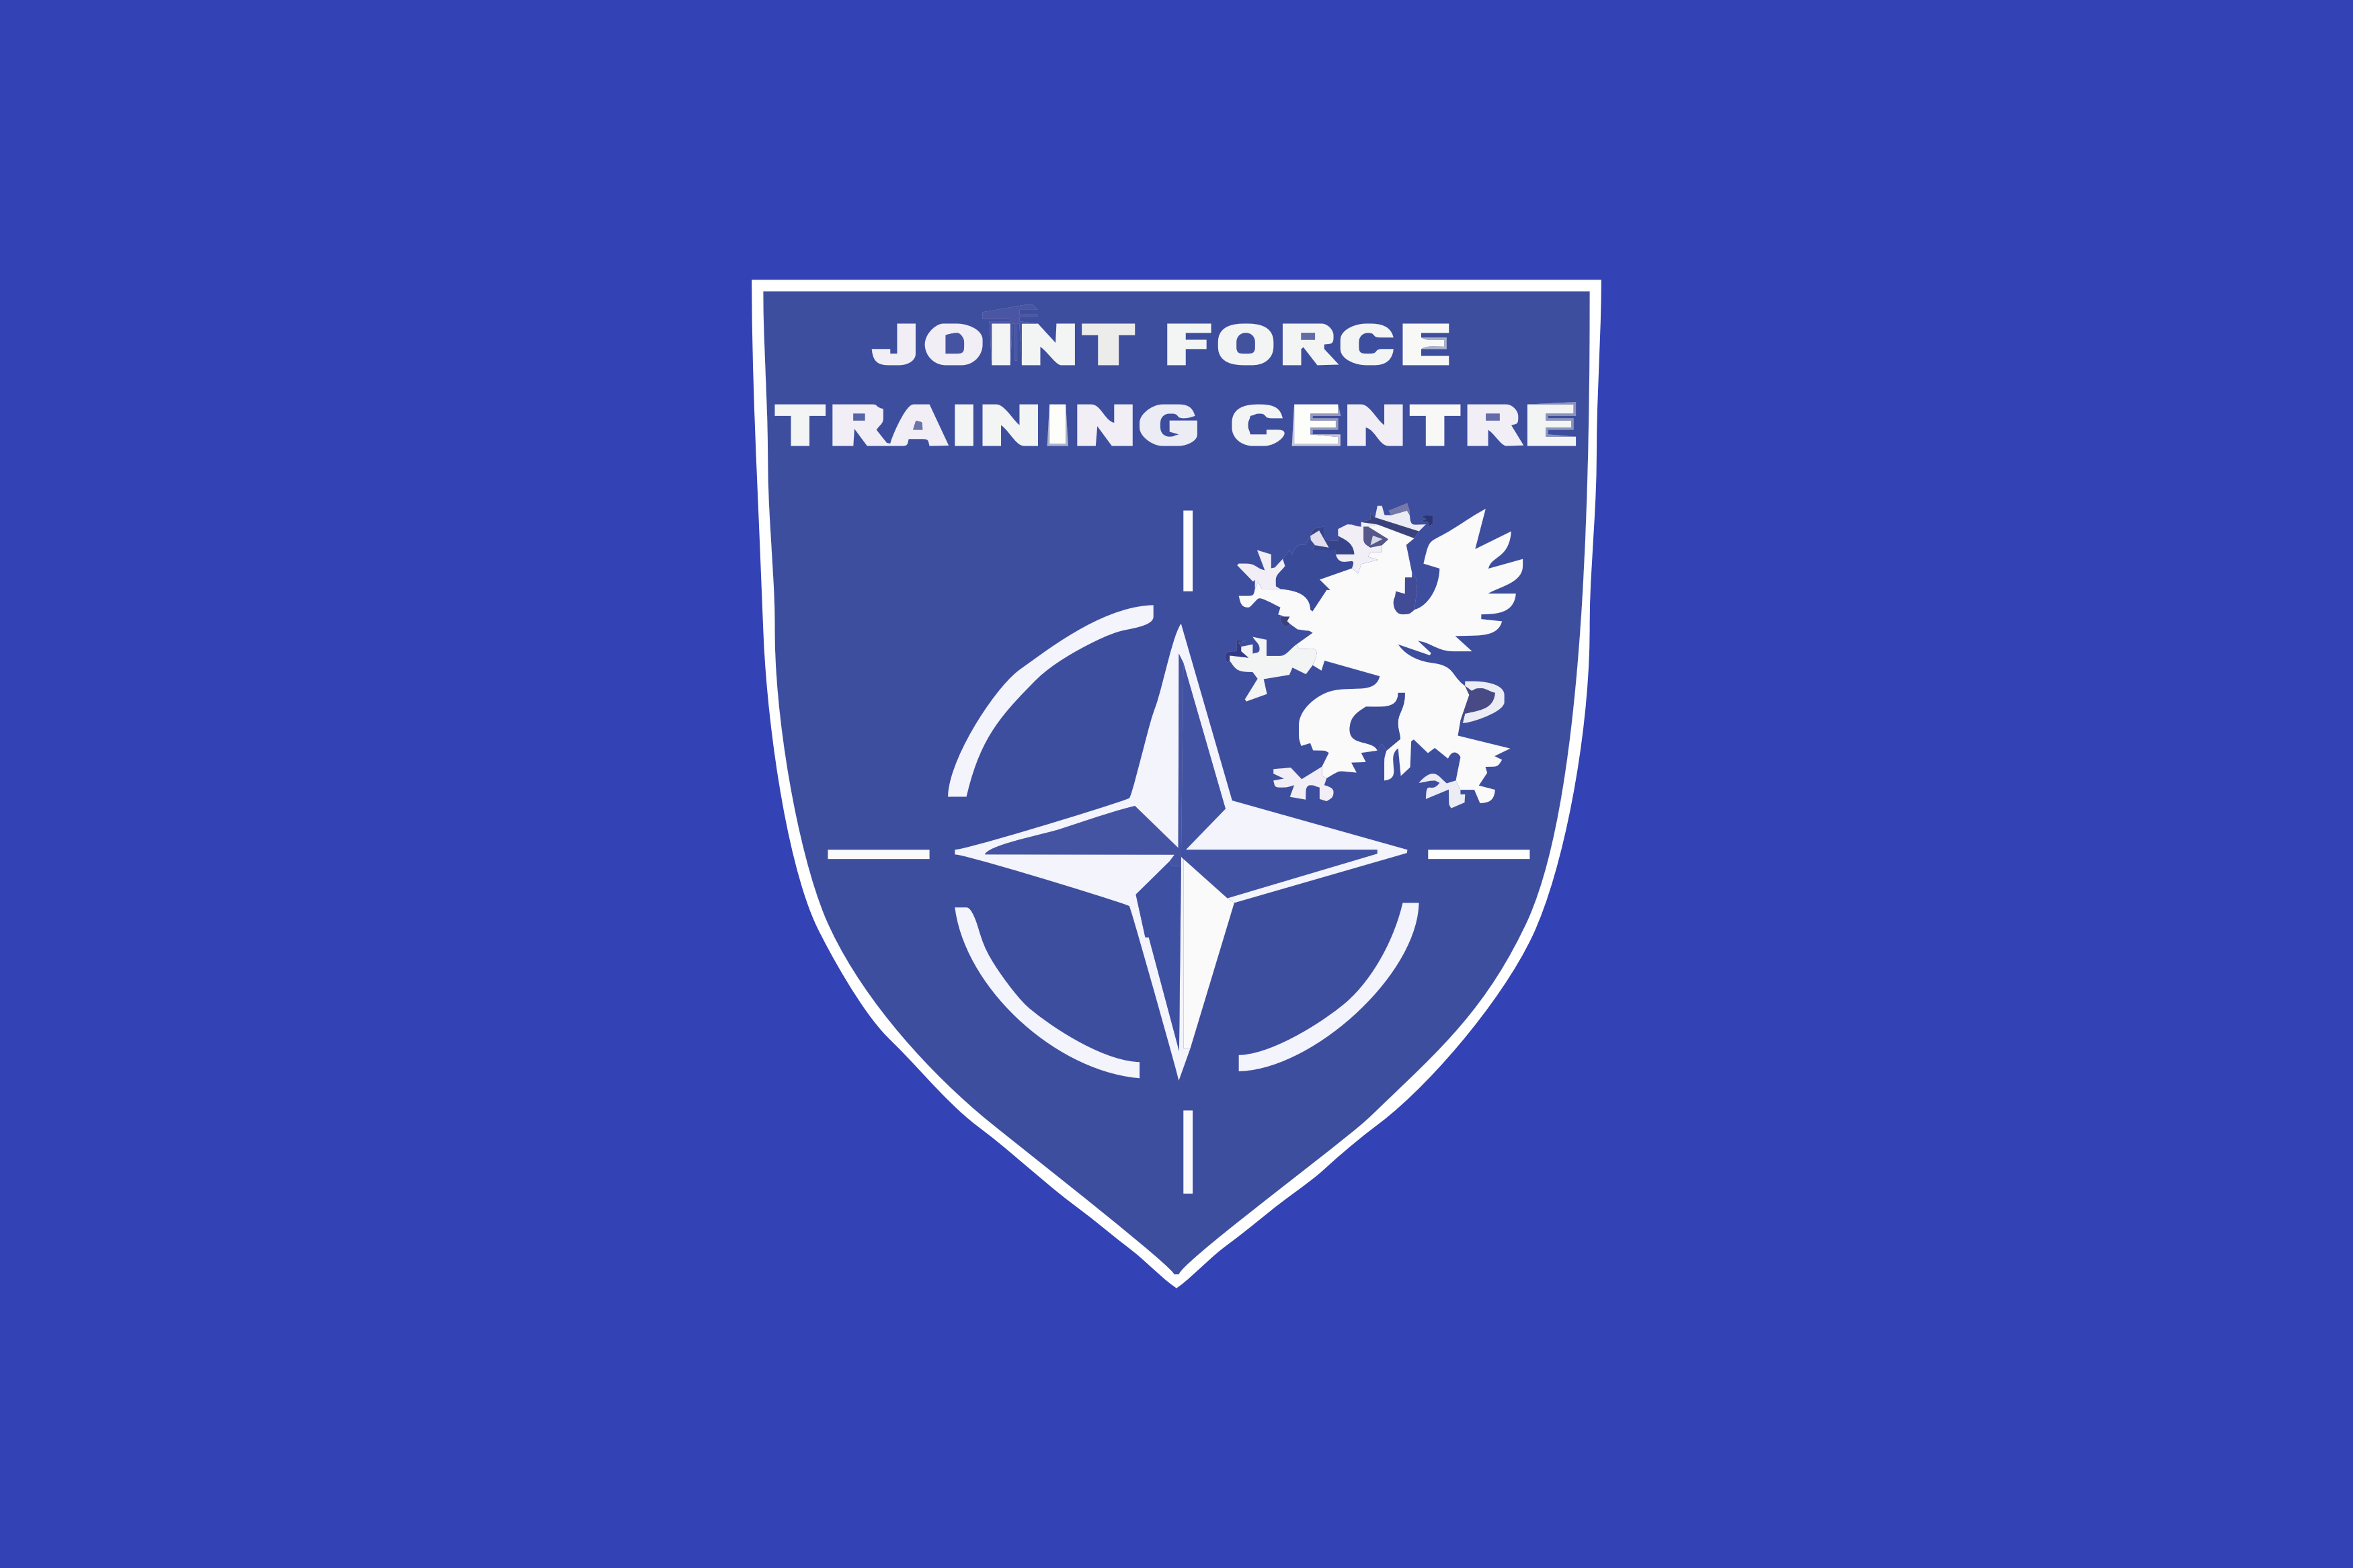 [NATO Joint Force Training Centre - JFTC - Bydgoszcz]